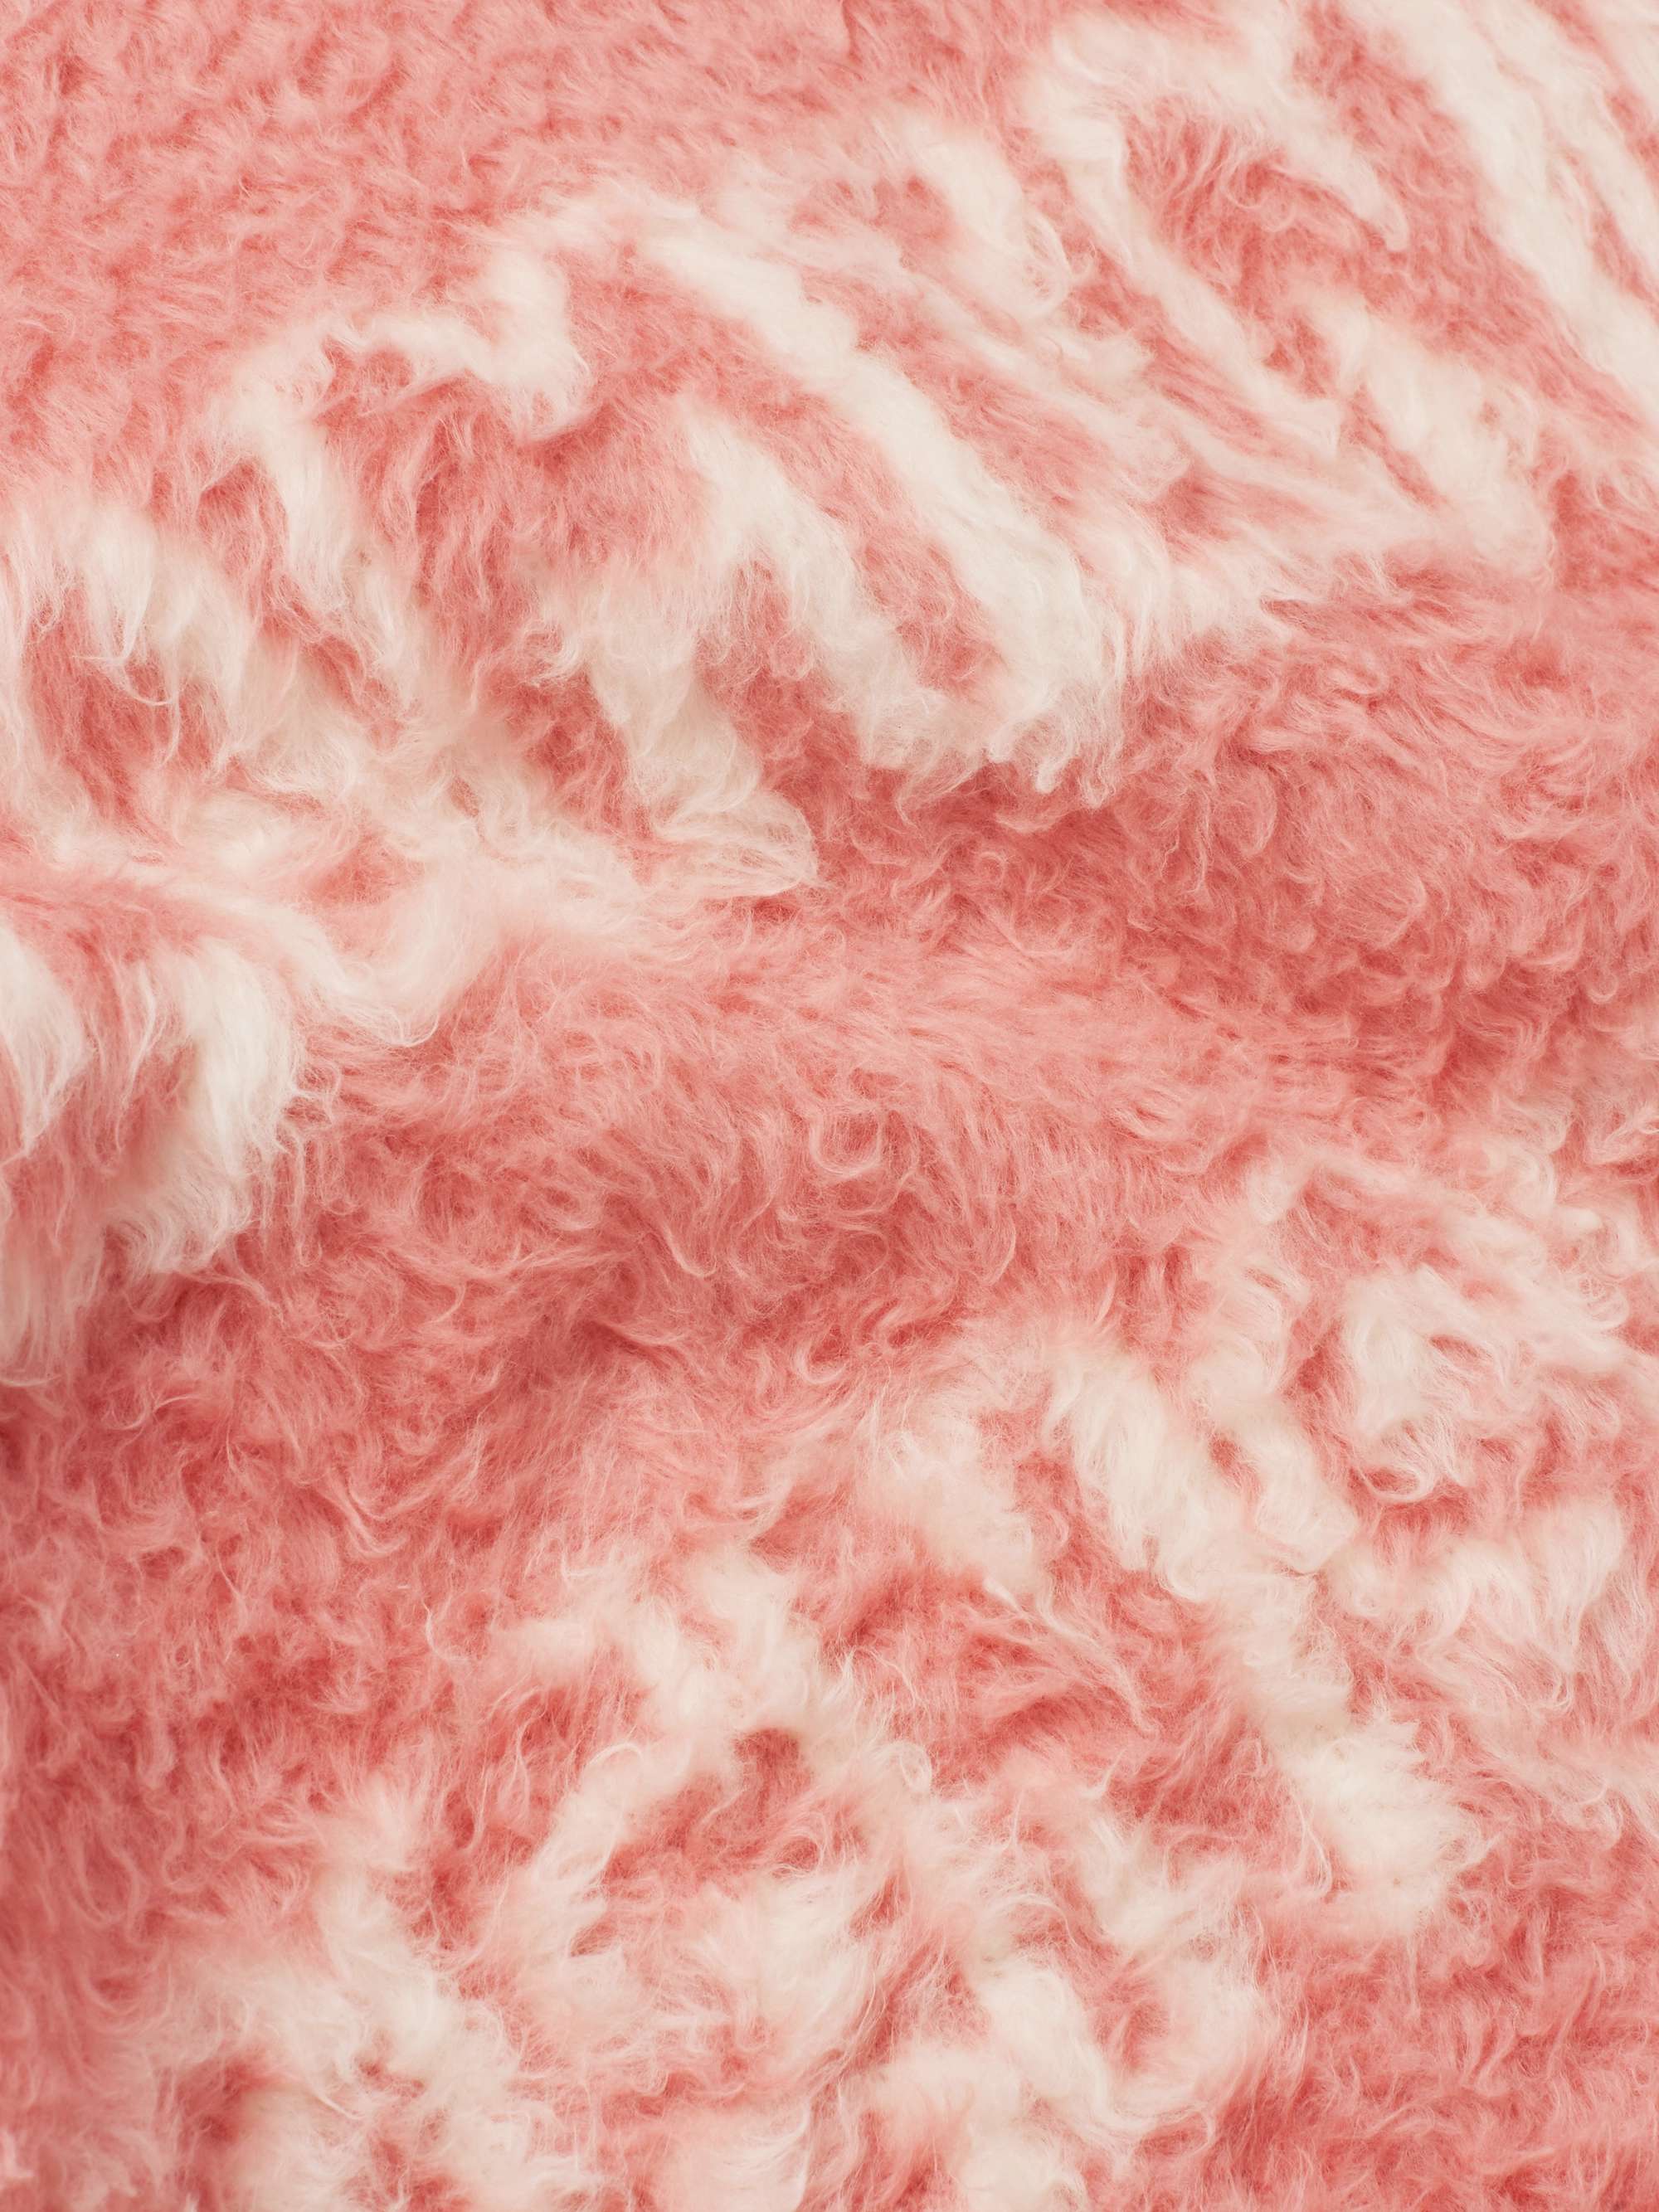 Brushed Cotton-Blend Jacquard Sweater